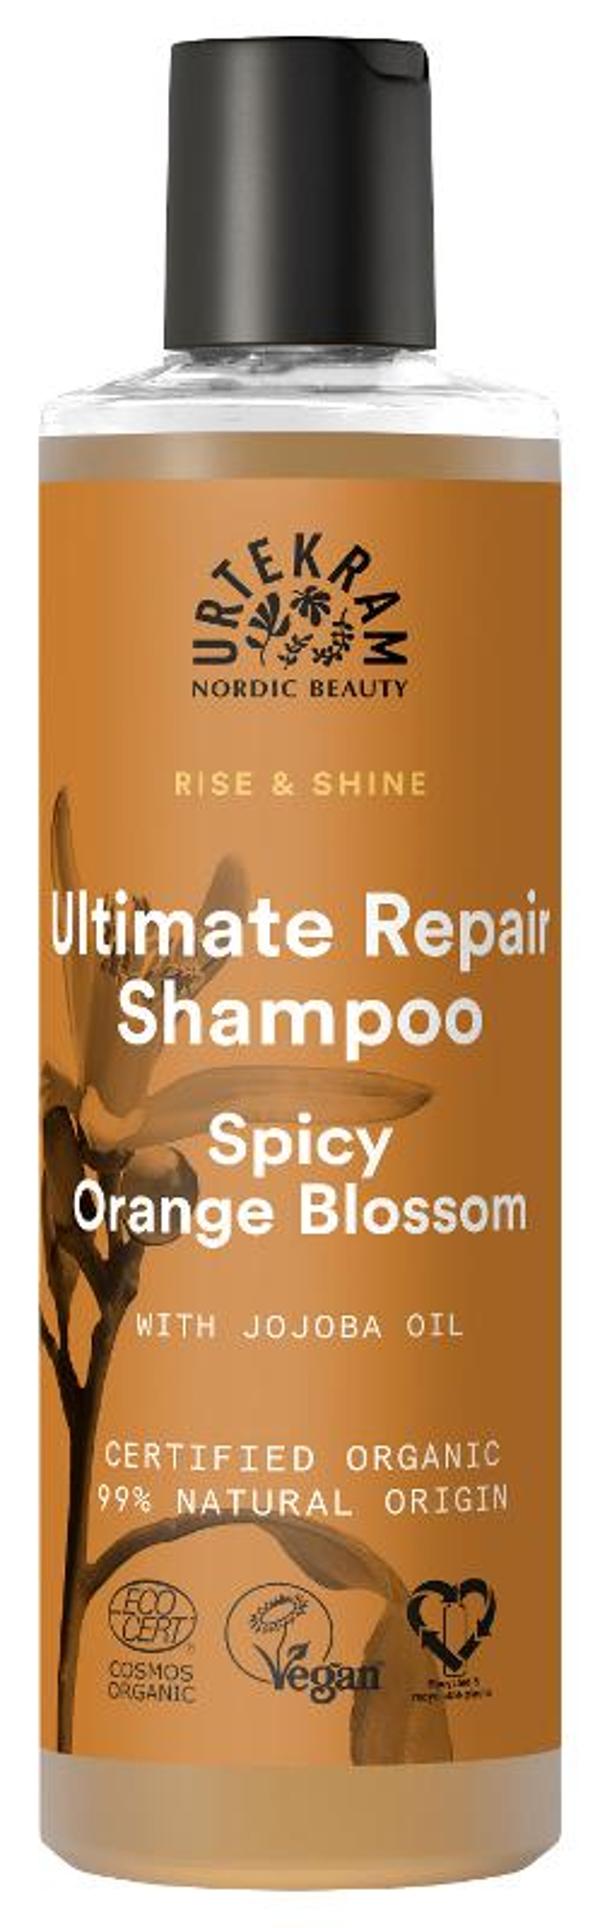 Produktfoto zu Shampoo Spicy Orange Blossom